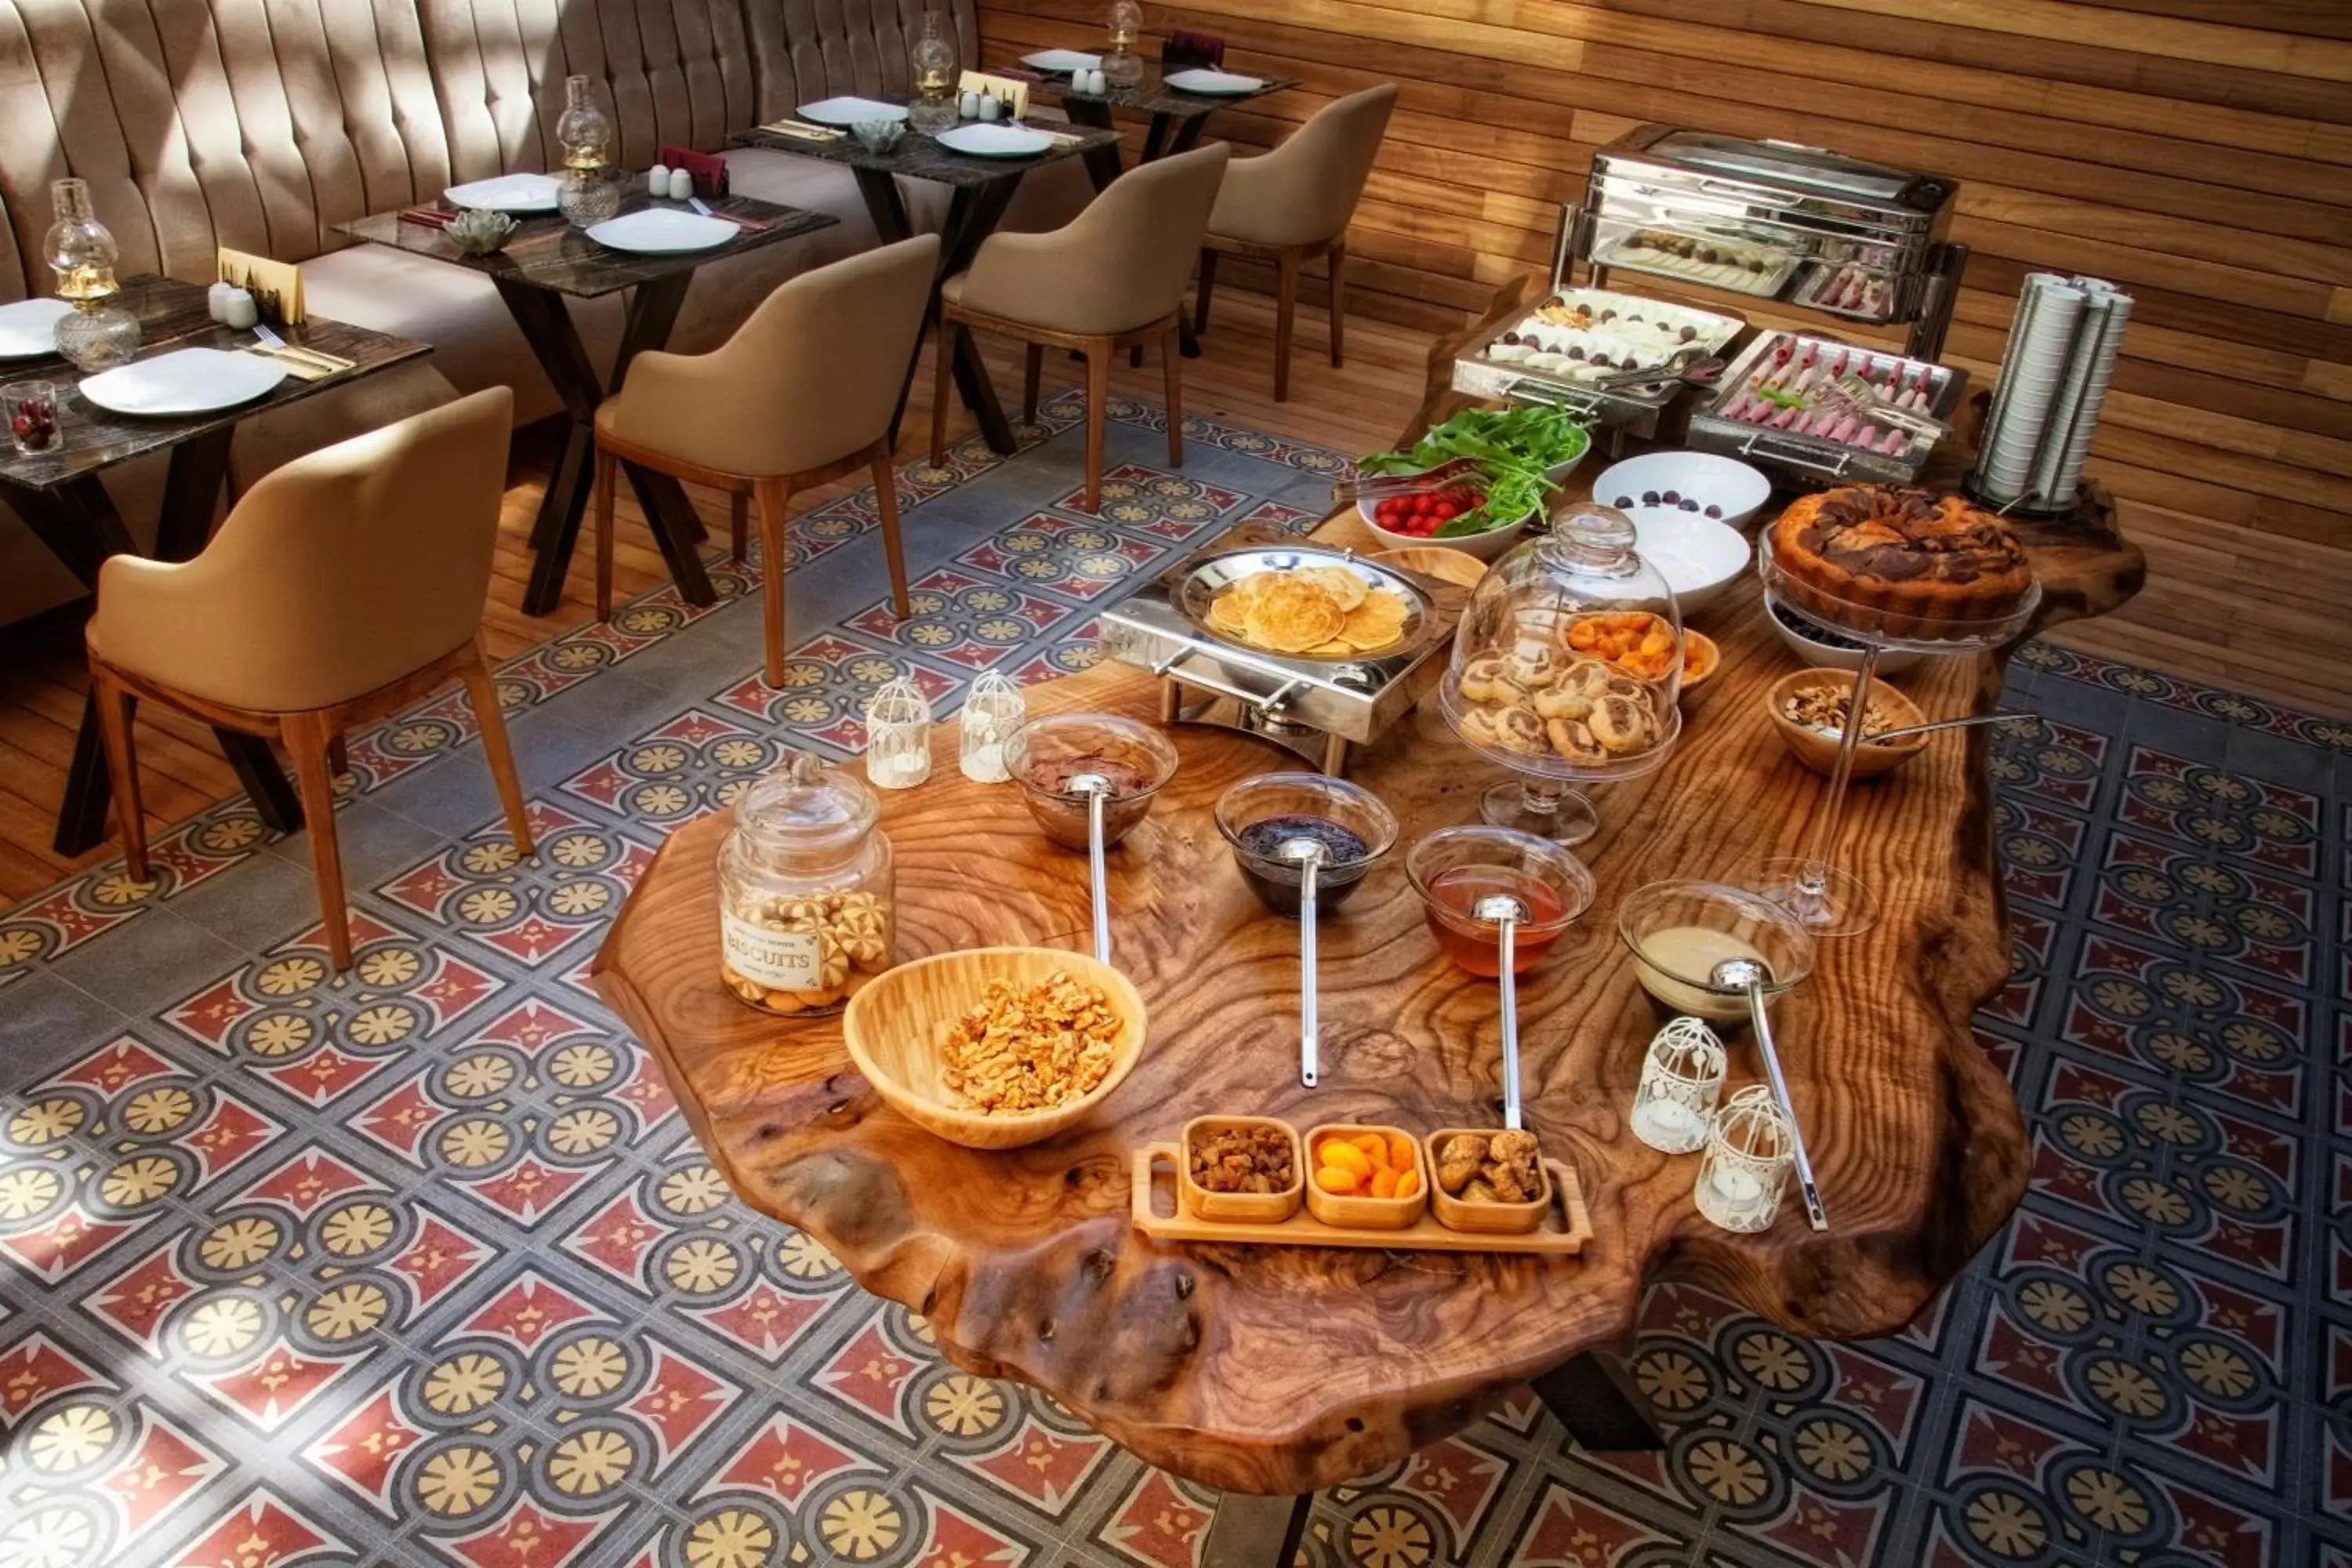 Buffet breakfast in Hotel Miniature - Ottoman Mansion